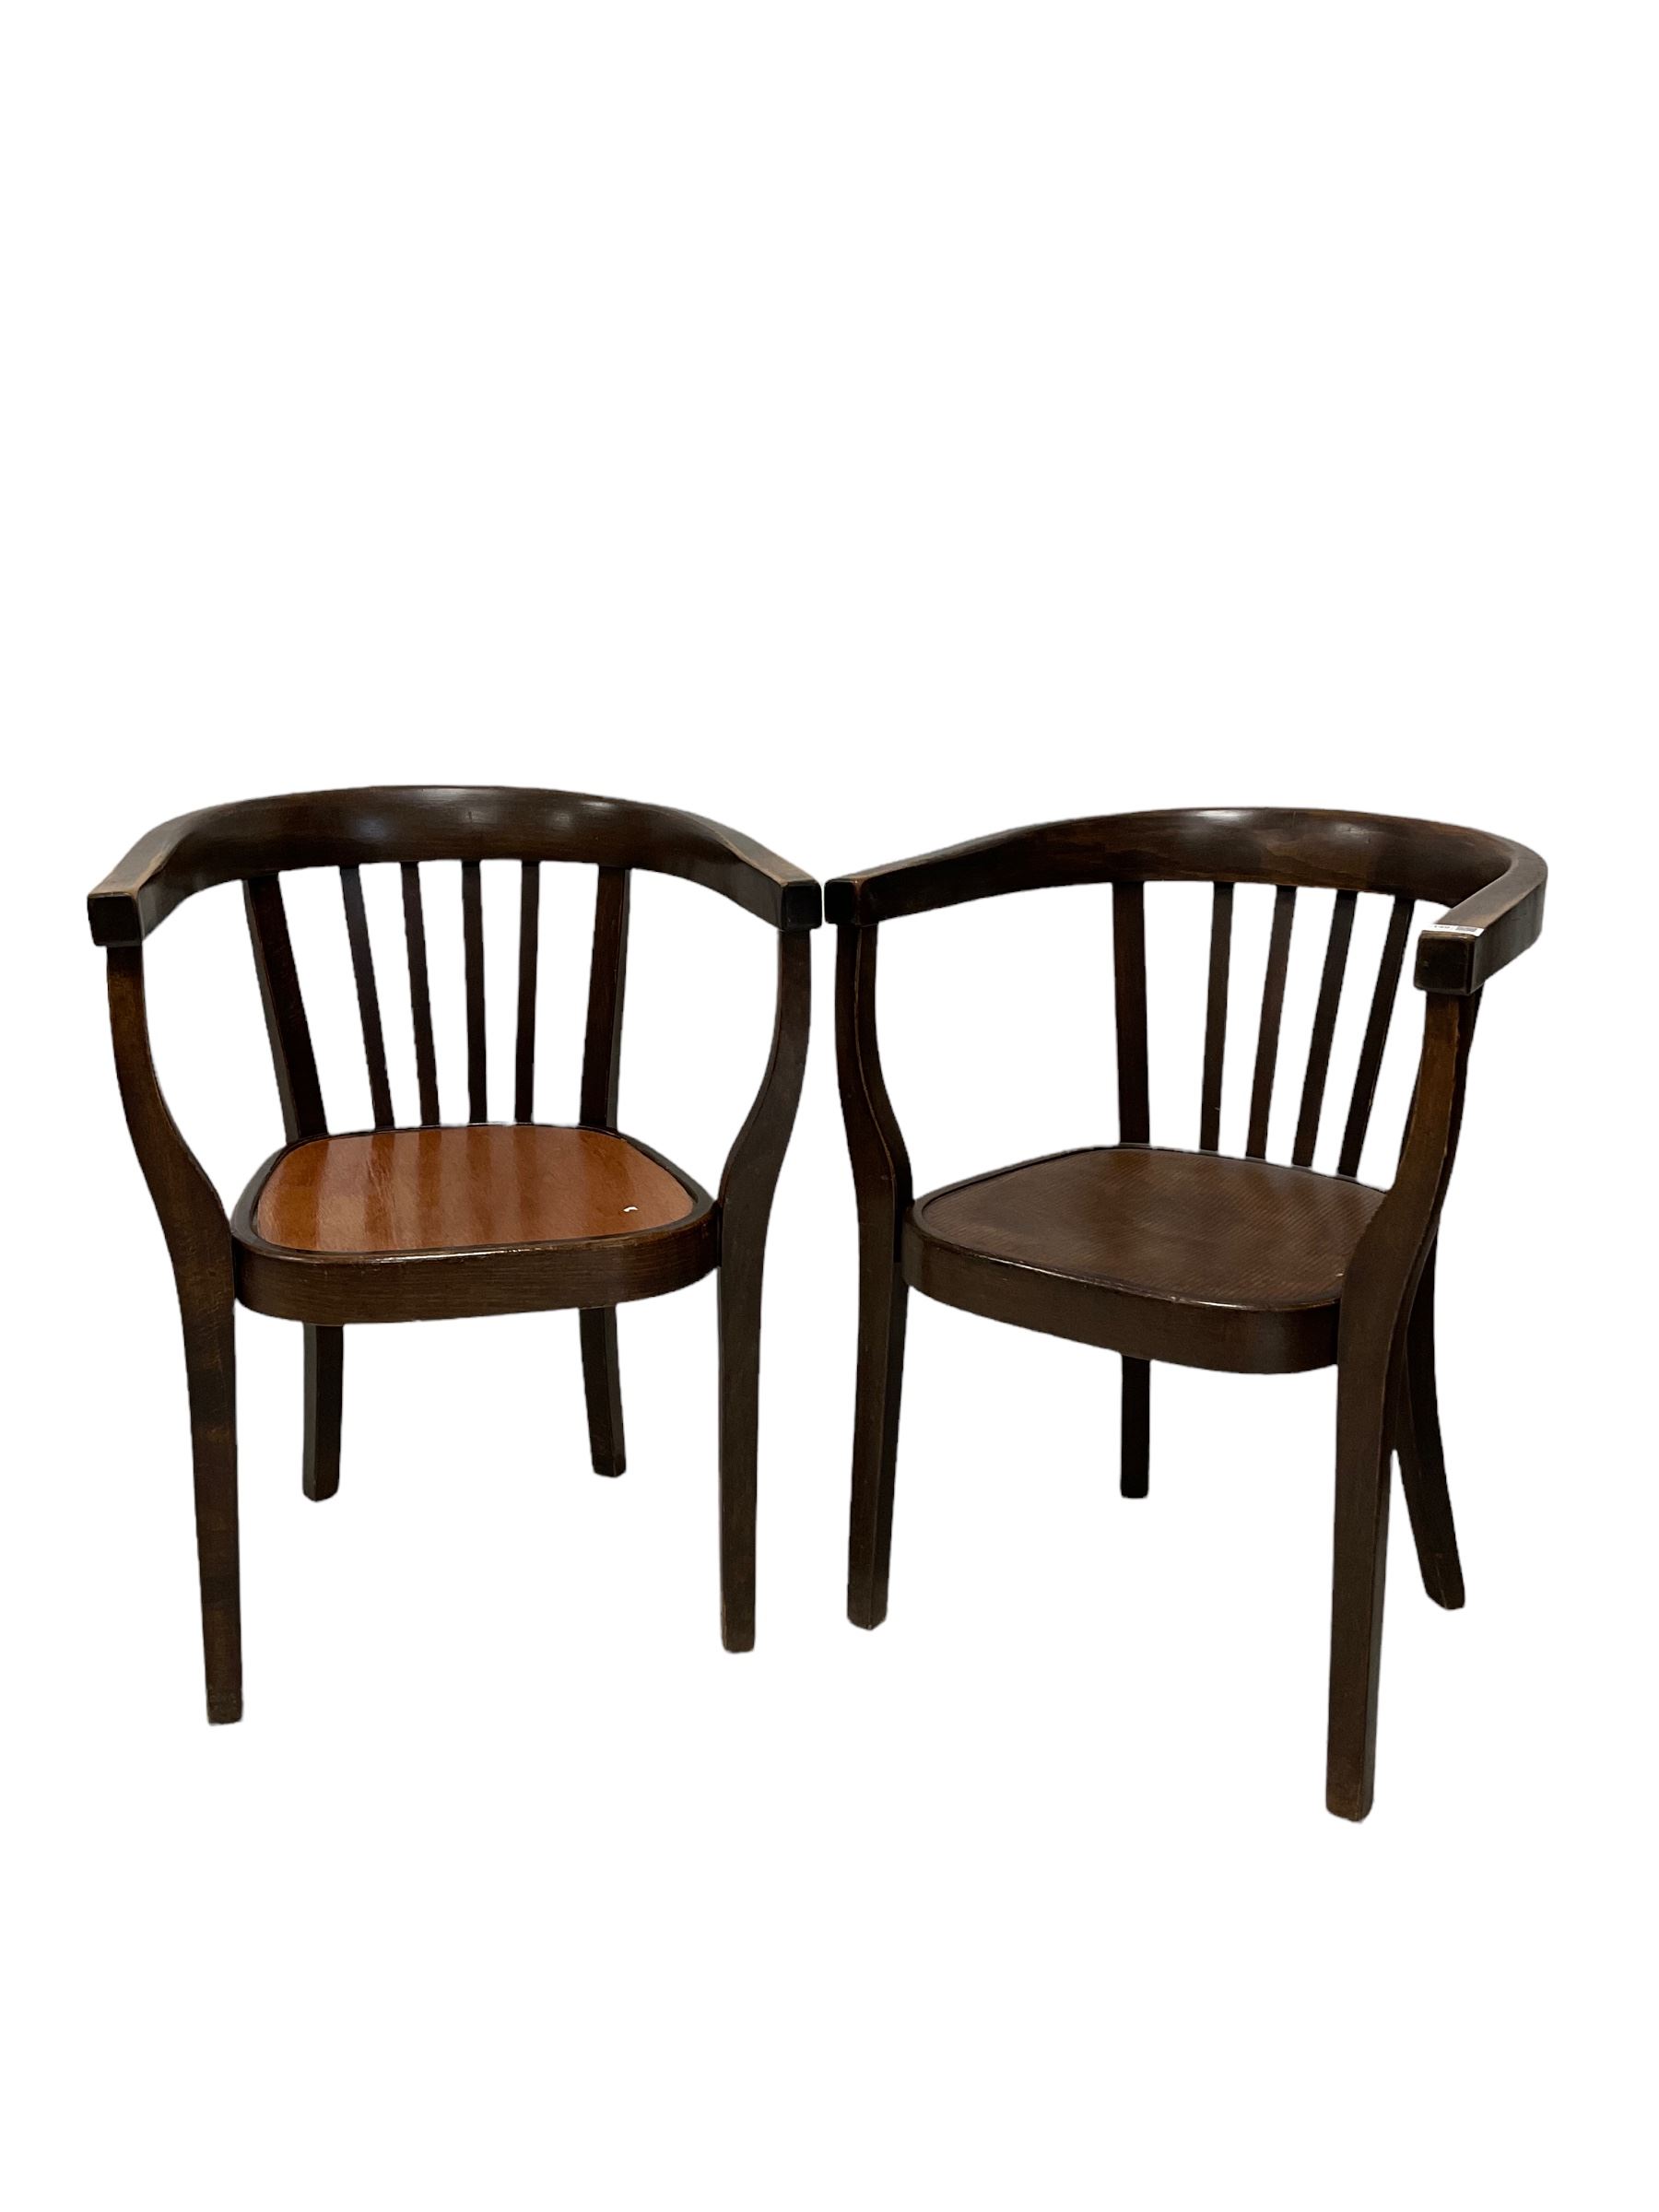 Pair of mid-20th century Czechoslovakian chairs